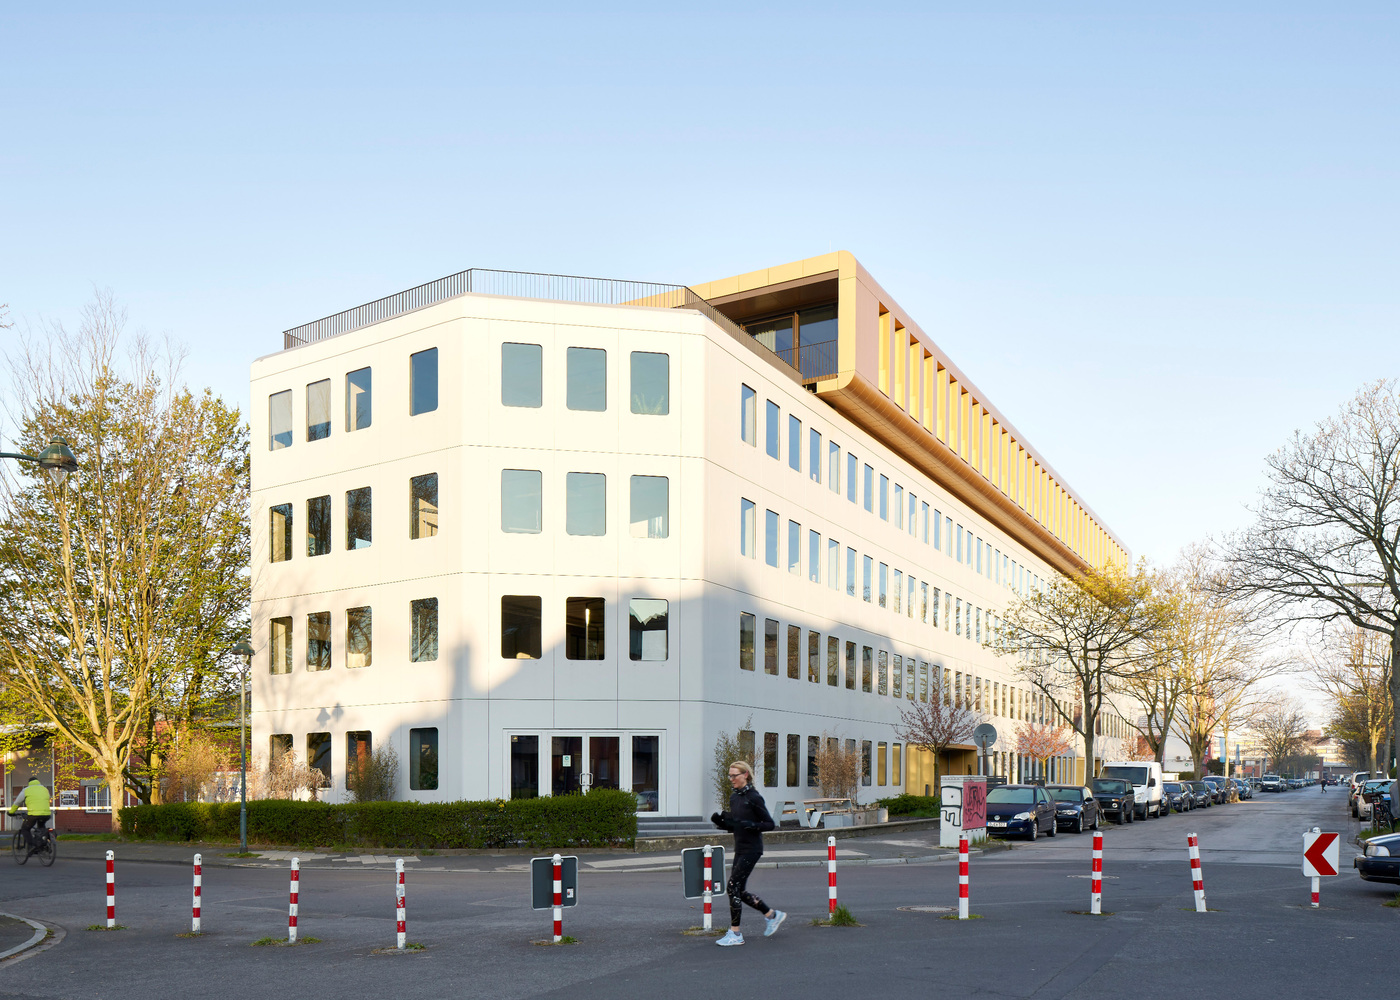 WERFT 16 办公大楼，用绿色建造技术为建筑设计金色帽檐.jpg